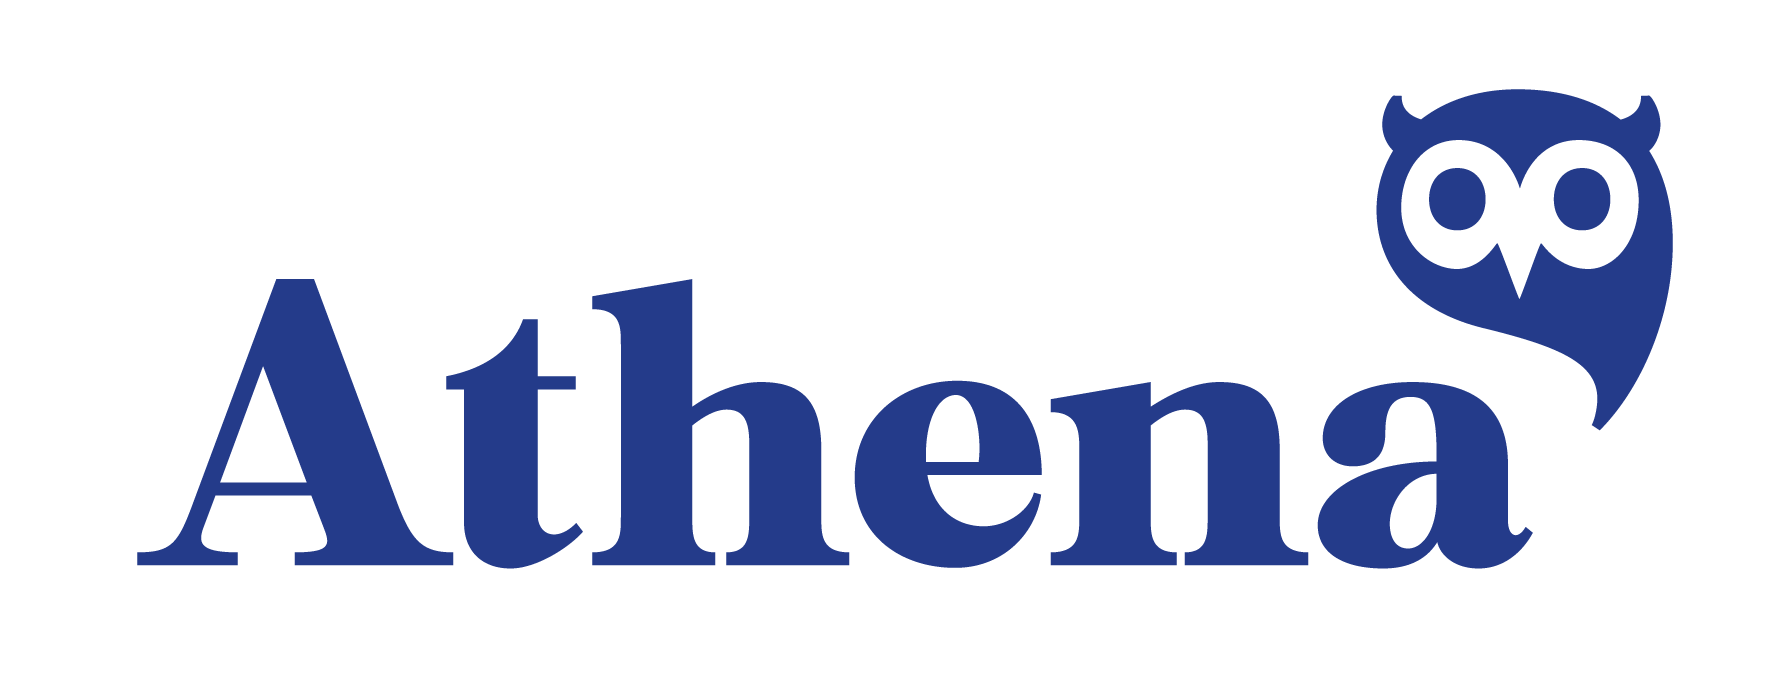 apetrus_athena_logo_blue